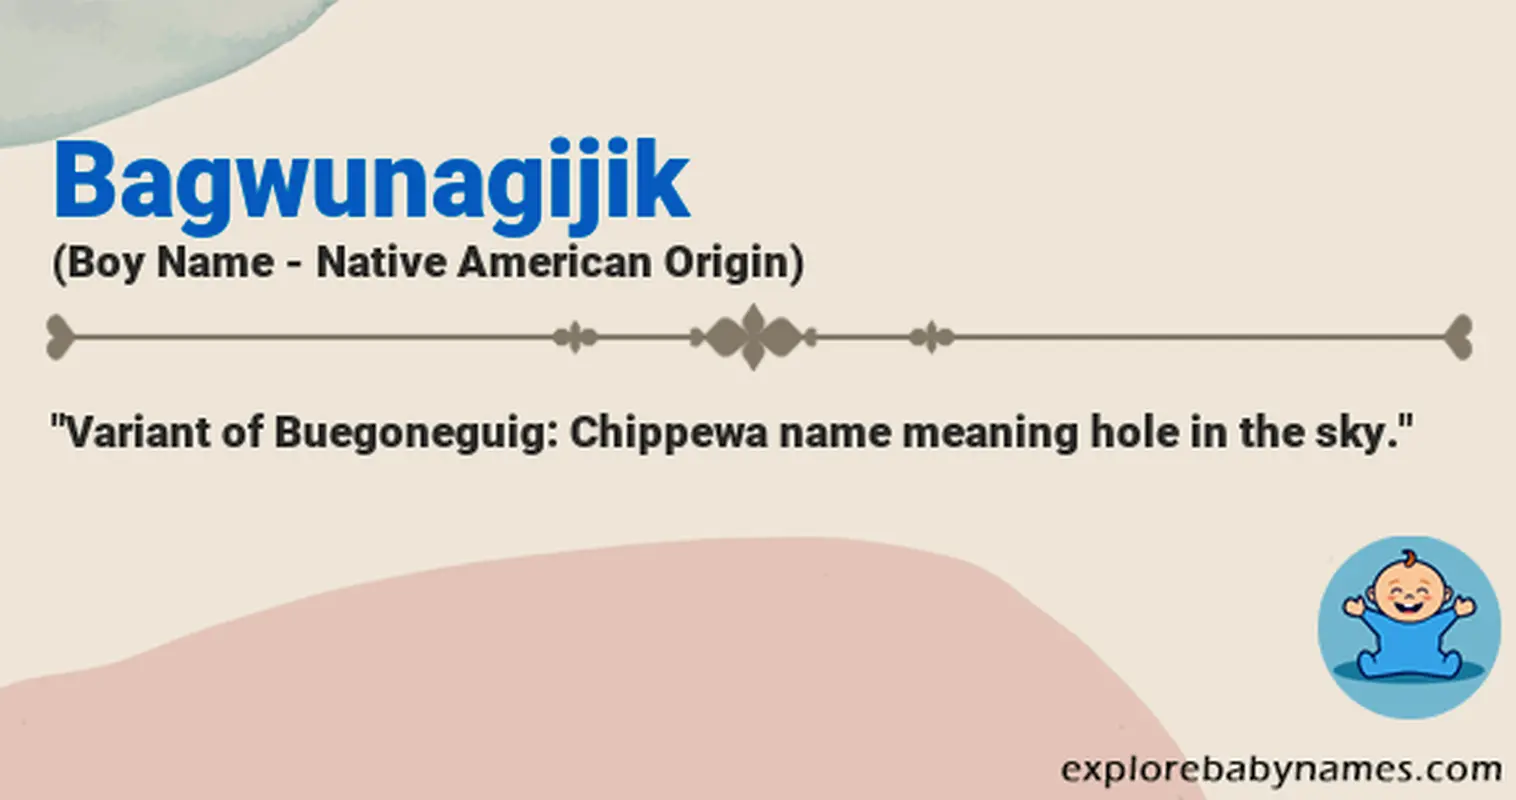 Meaning of Bagwunagijik